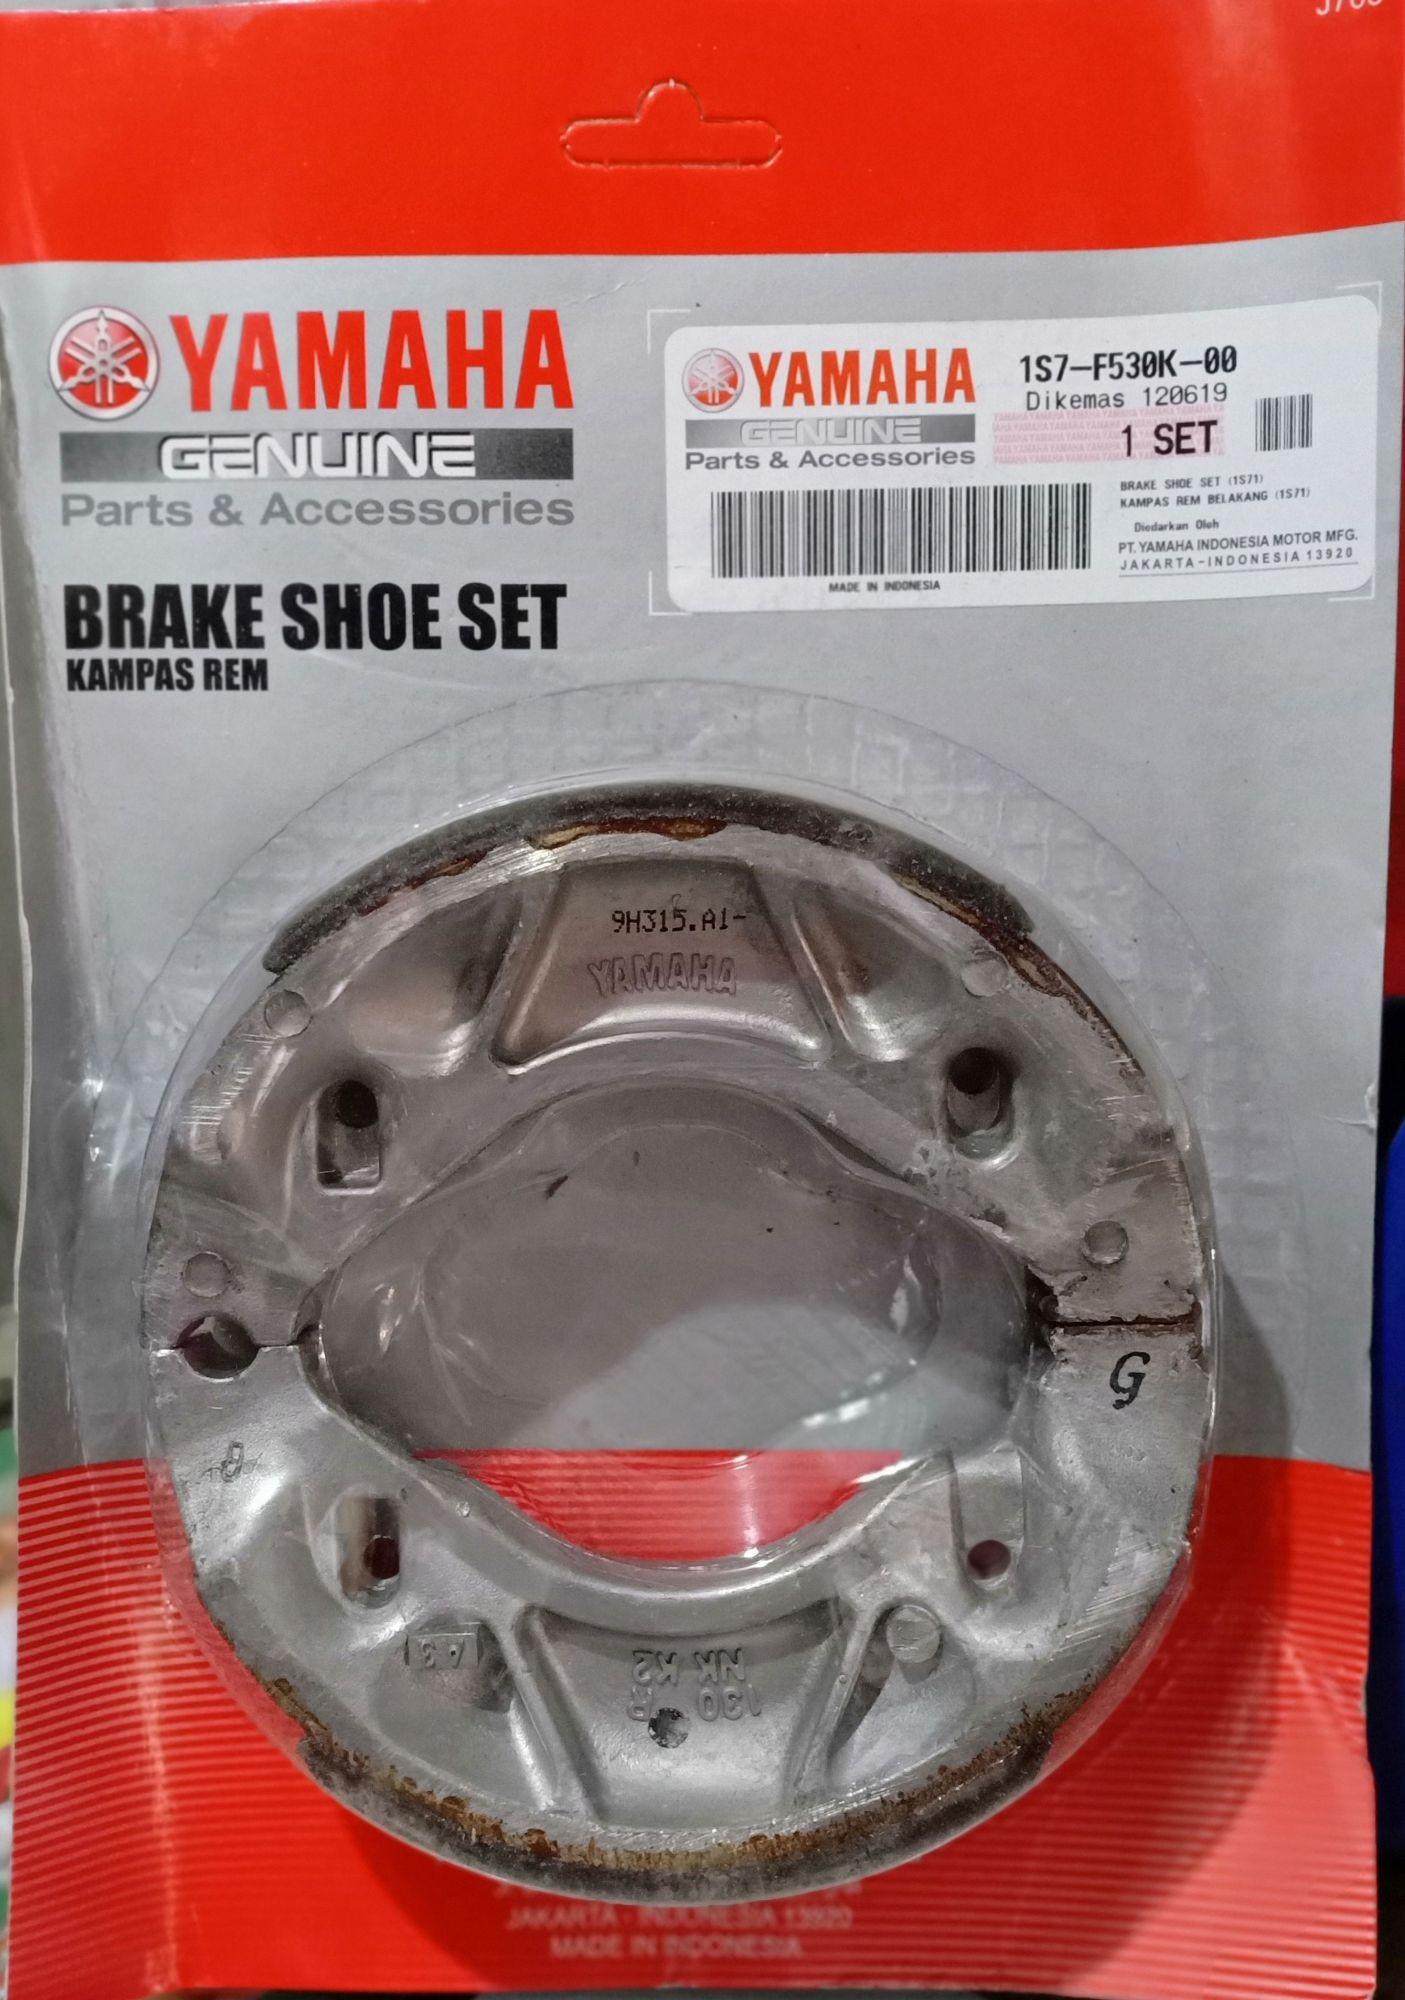 Buy Yamaha Brake Shoes Online | lazada.com.ph